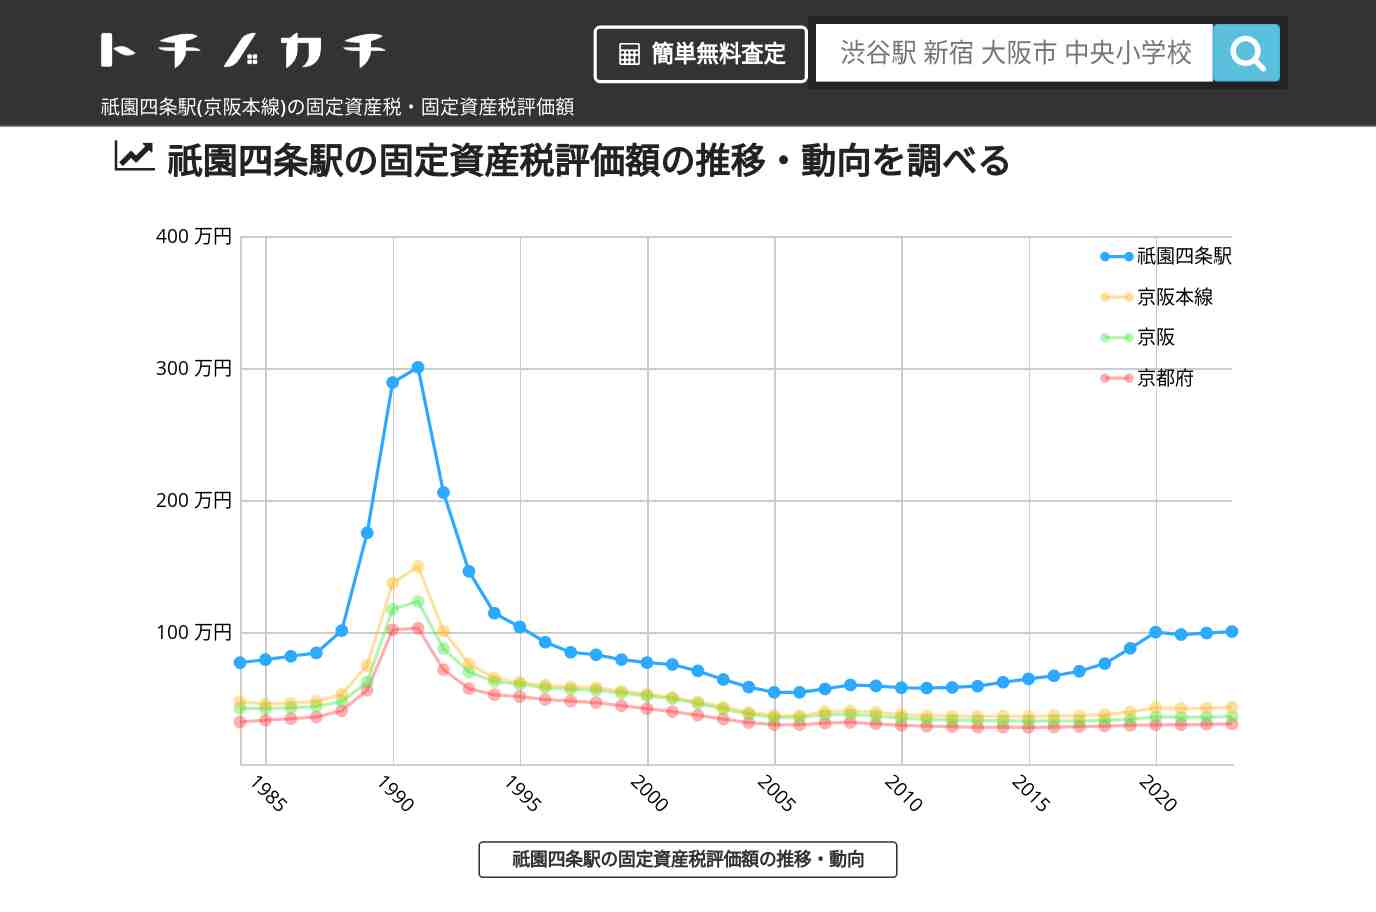 祇園四条駅(京阪本線)の固定資産税・固定資産税評価額 | トチノカチ